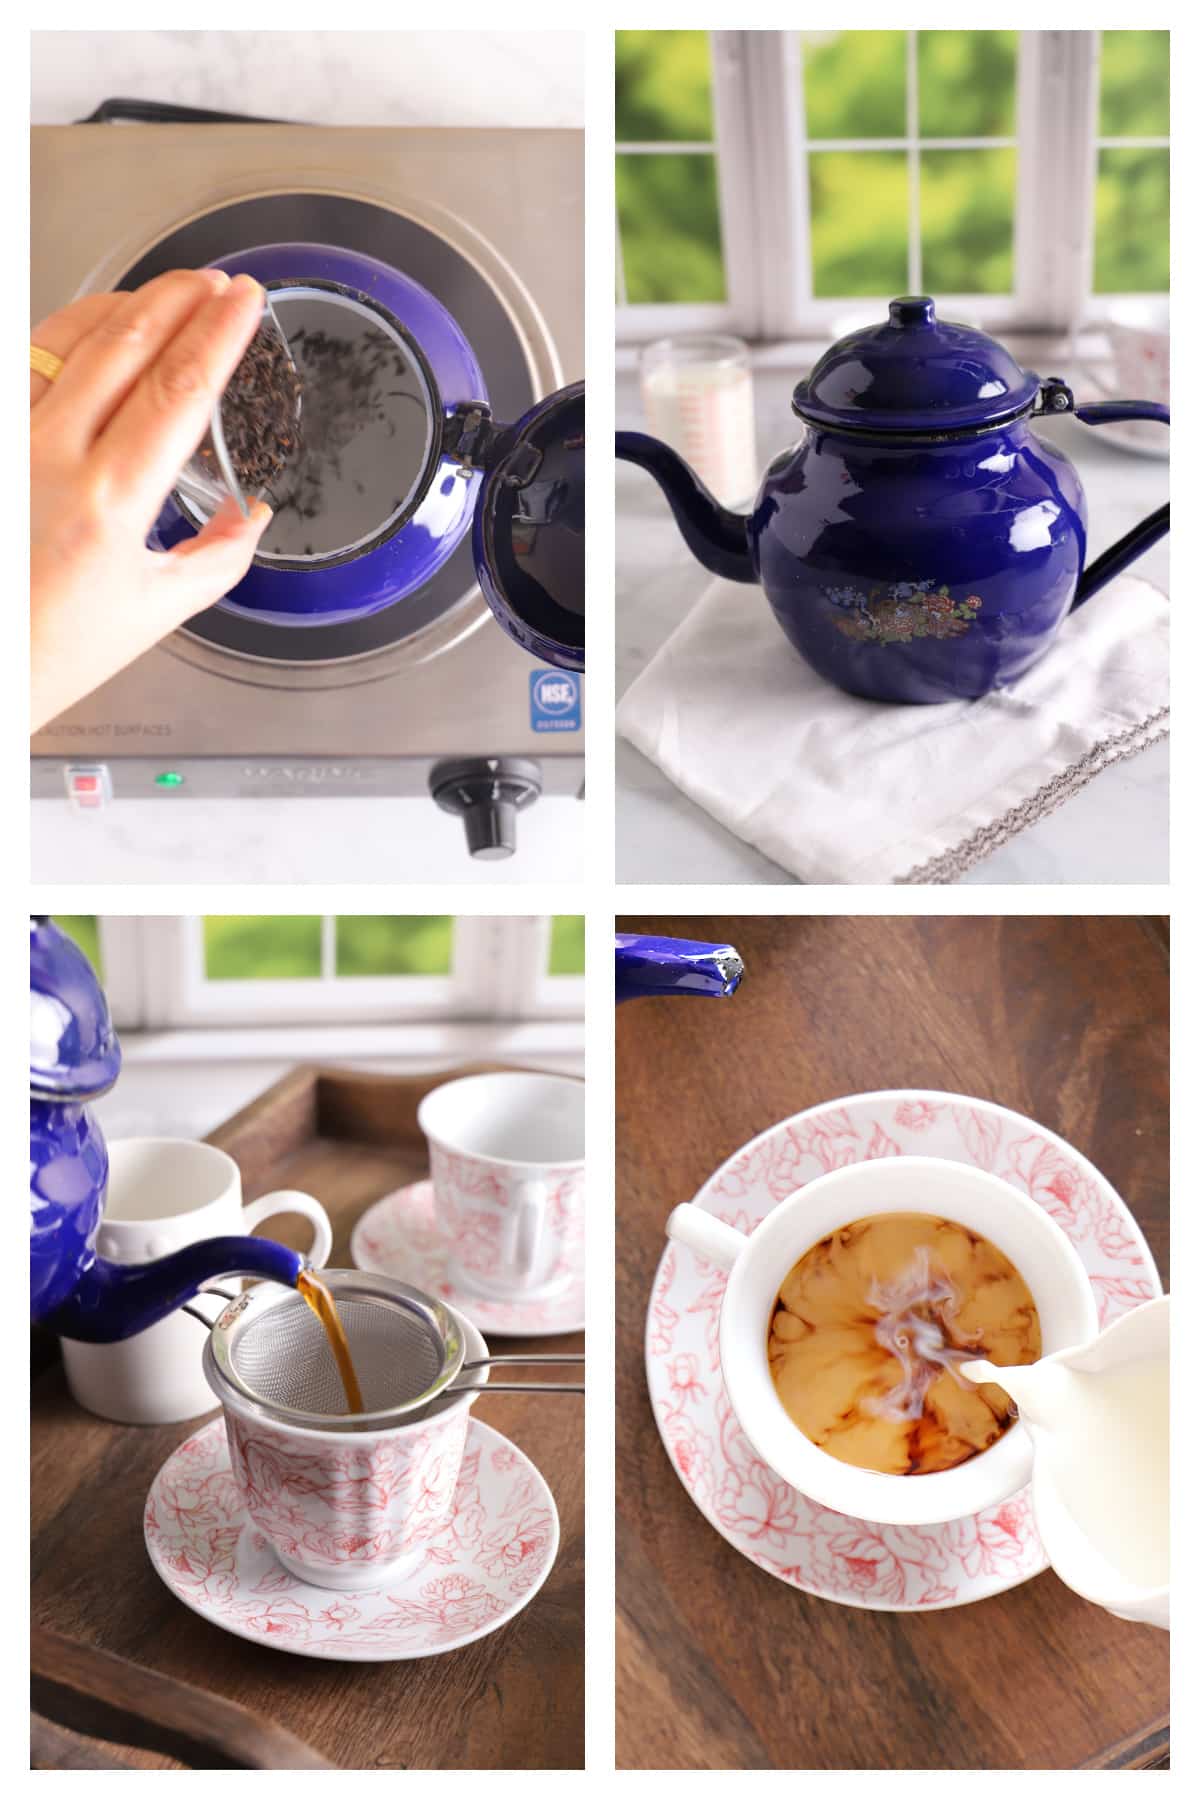 Step by step instruction to make milk tea.